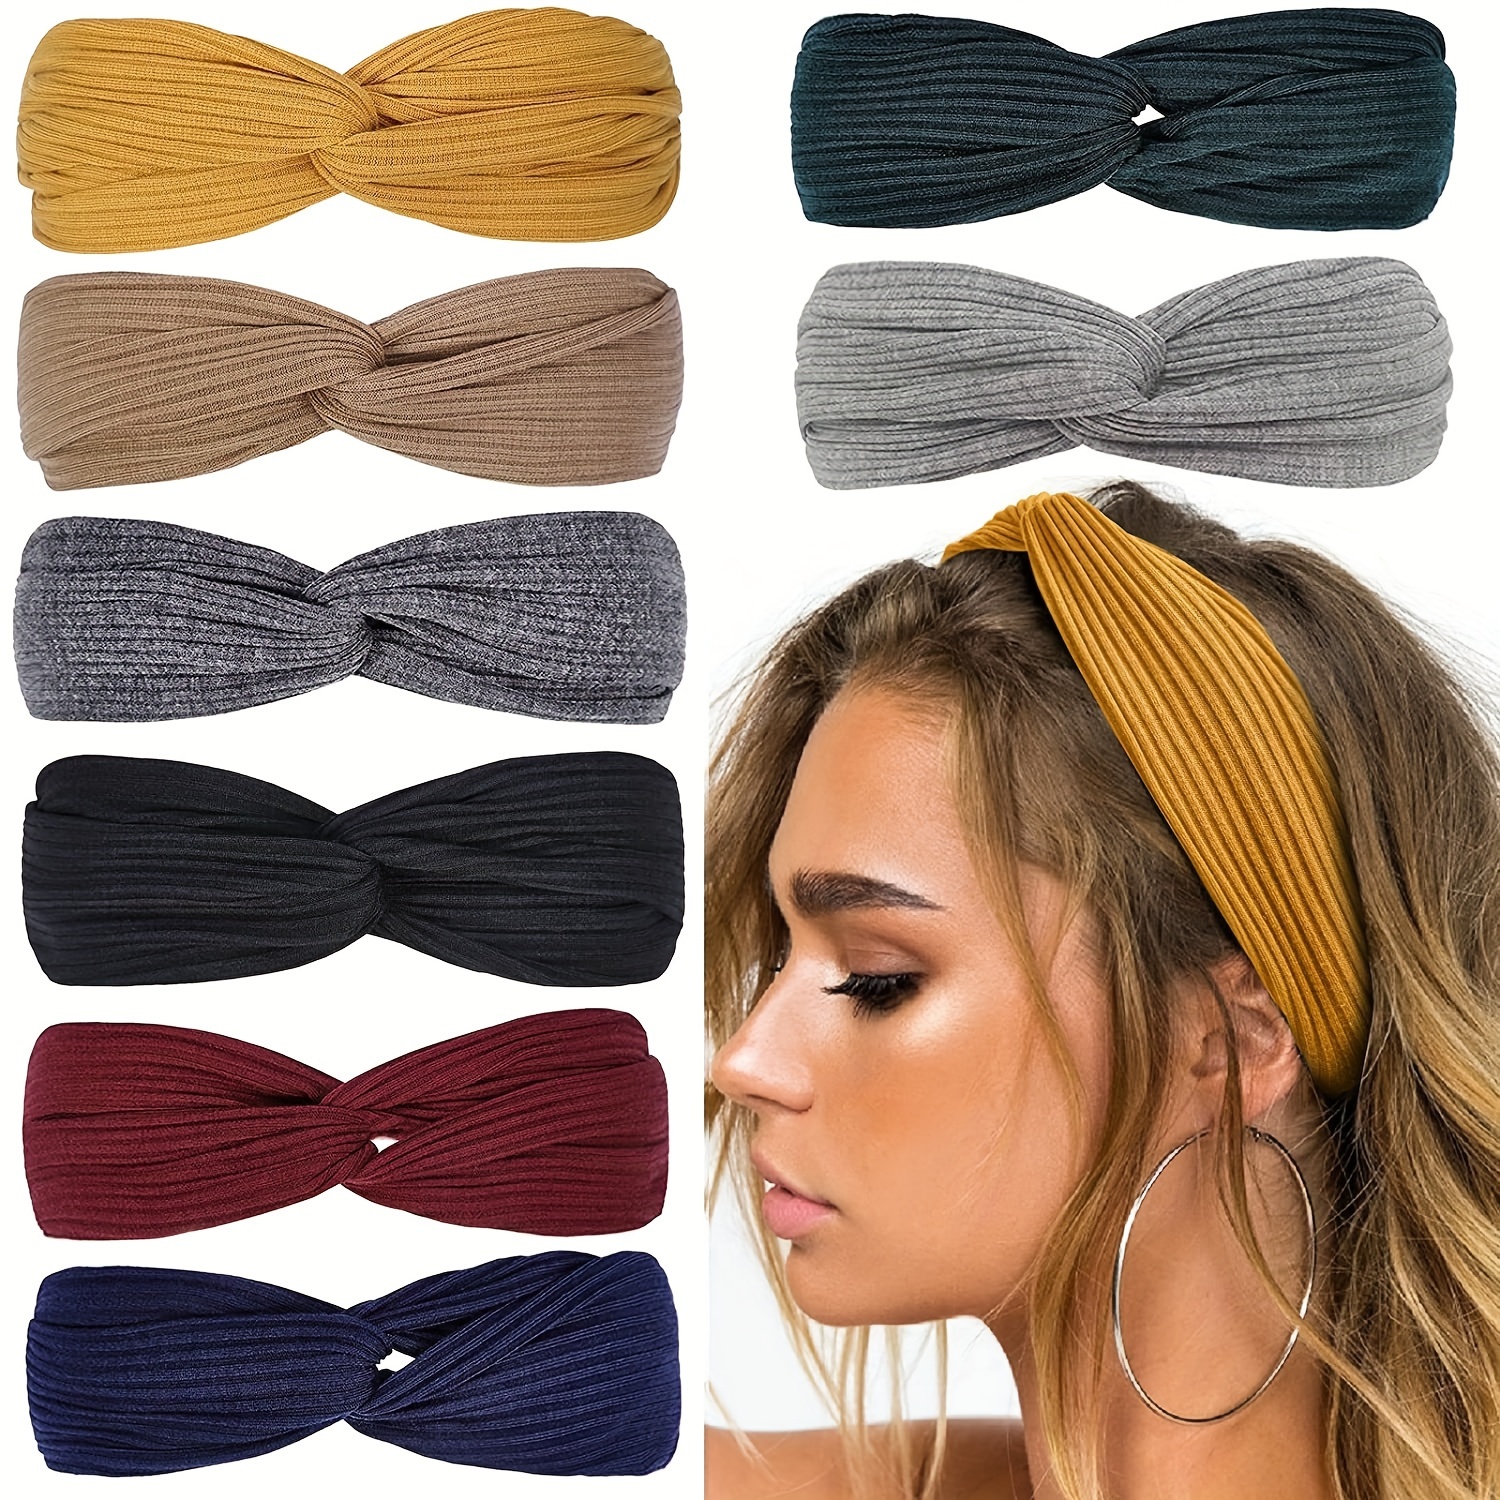 

8pcs Face Washing Headband, Yoga Exercise Headband, Hair Hoop, Cross Knitted Thread Headband, Hair Accessory